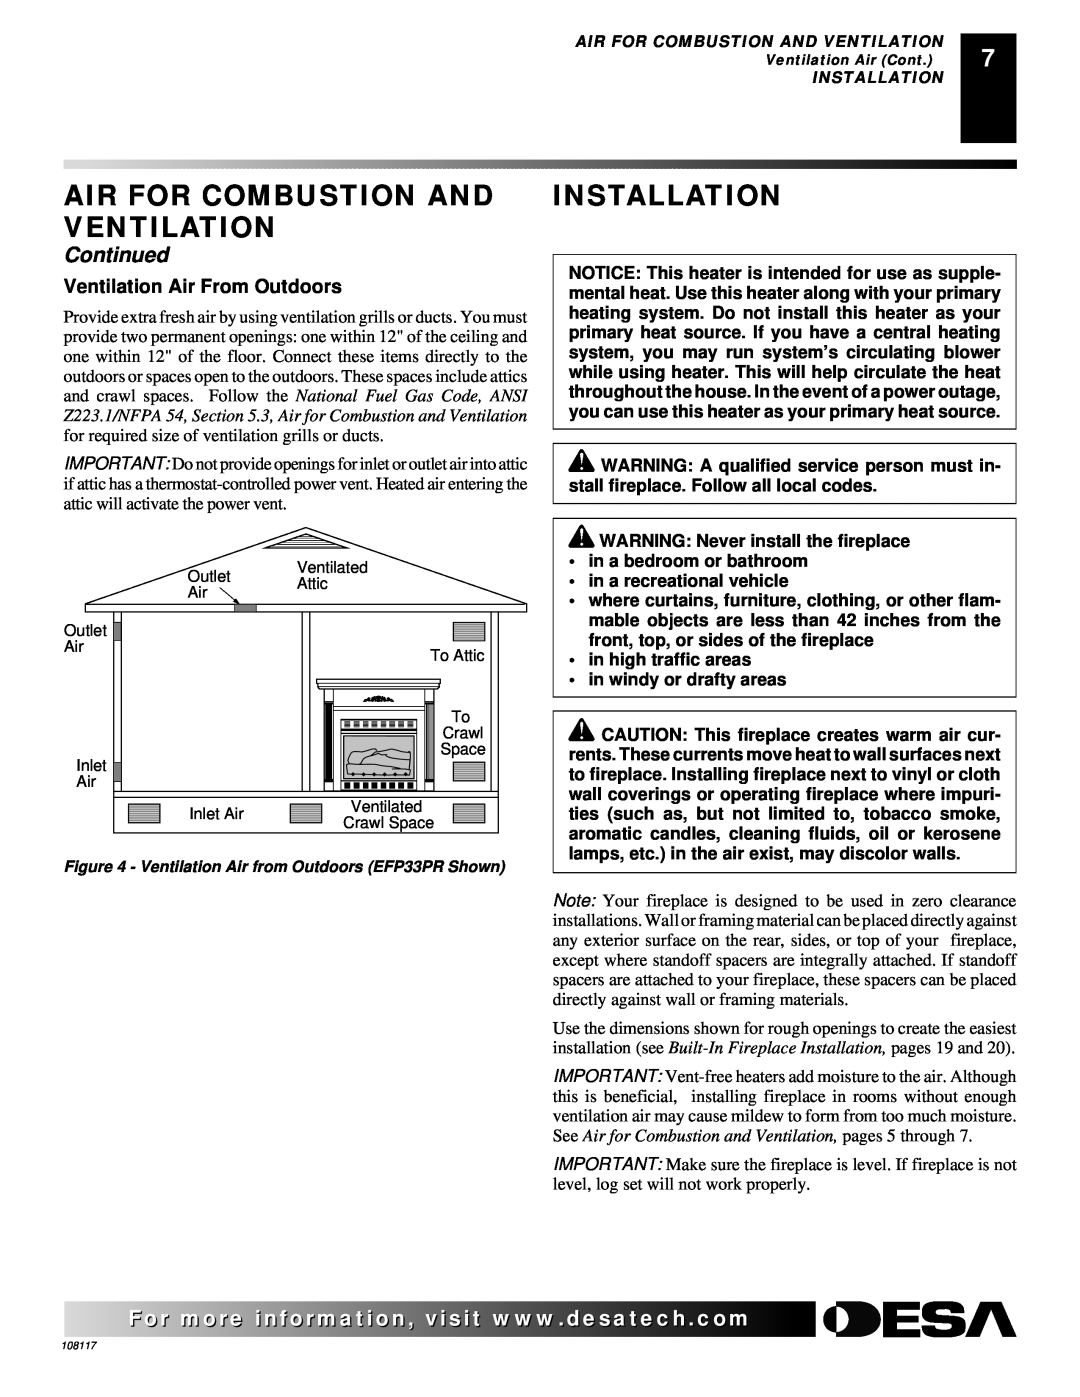 Desa VTGF33PR, VTGF33NR Installation, Air For Combustion And Ventilation, Continued, Ventilation Air From Outdoors 